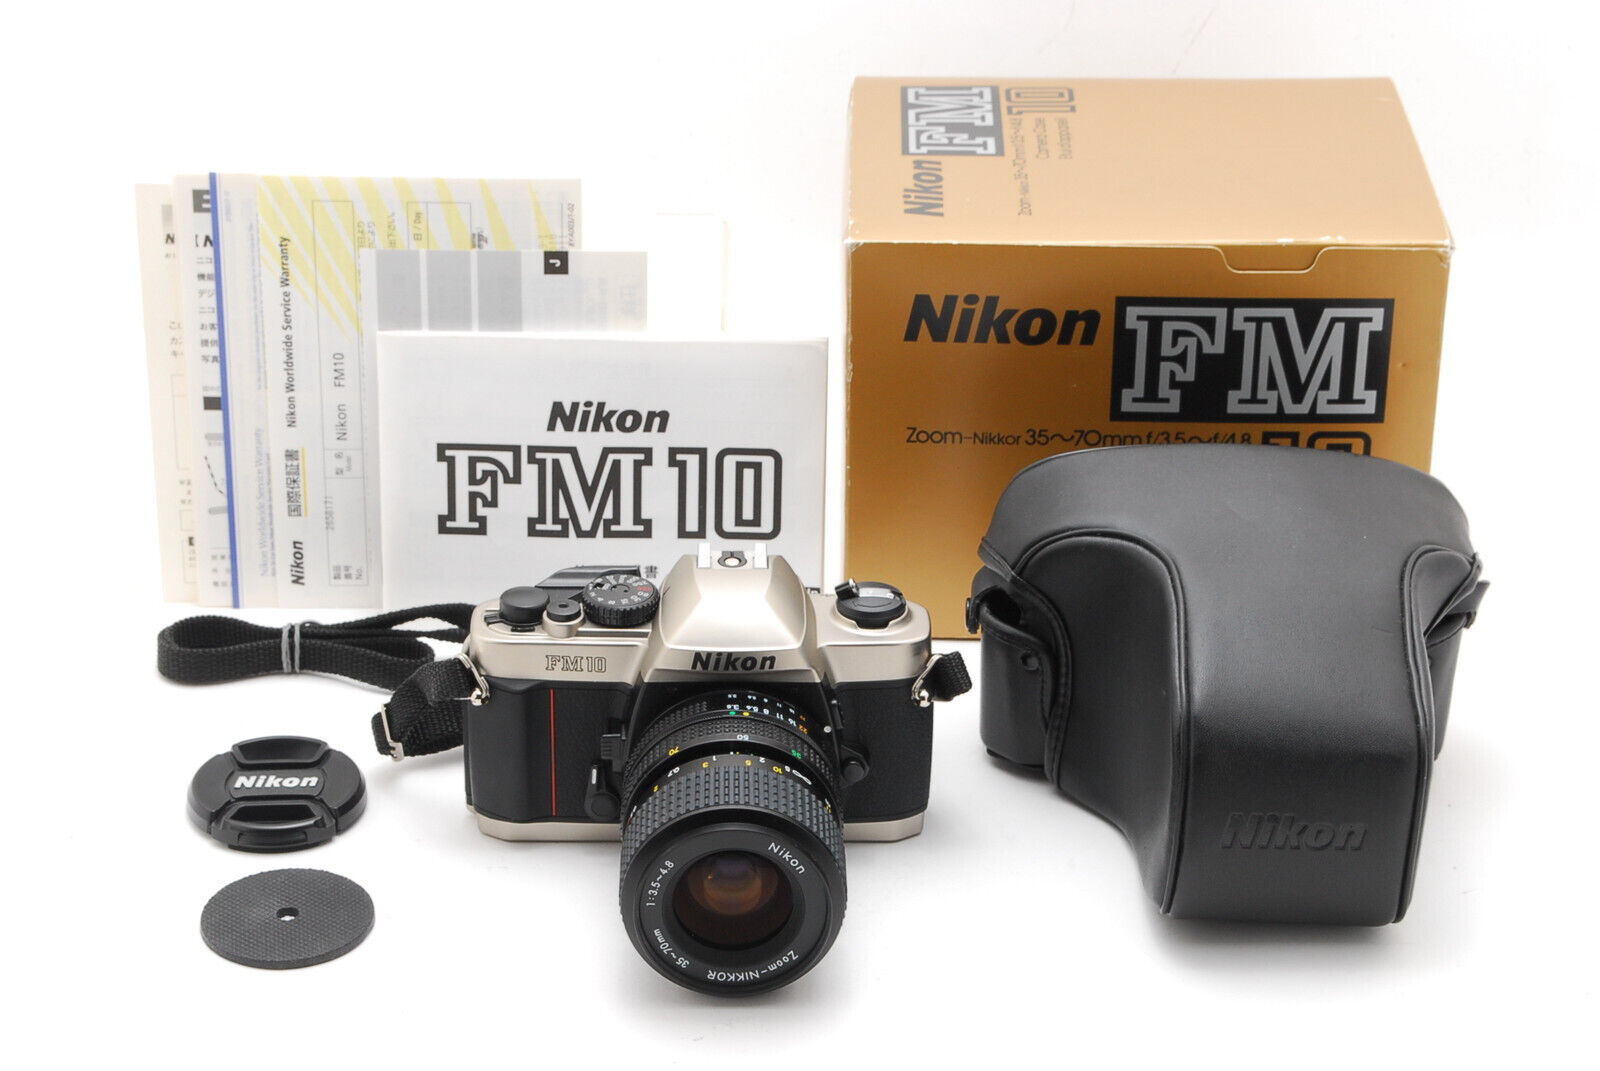 Nikon FM 10 Zoom-NIKKOR 35-70mm付き（値下げ） | www